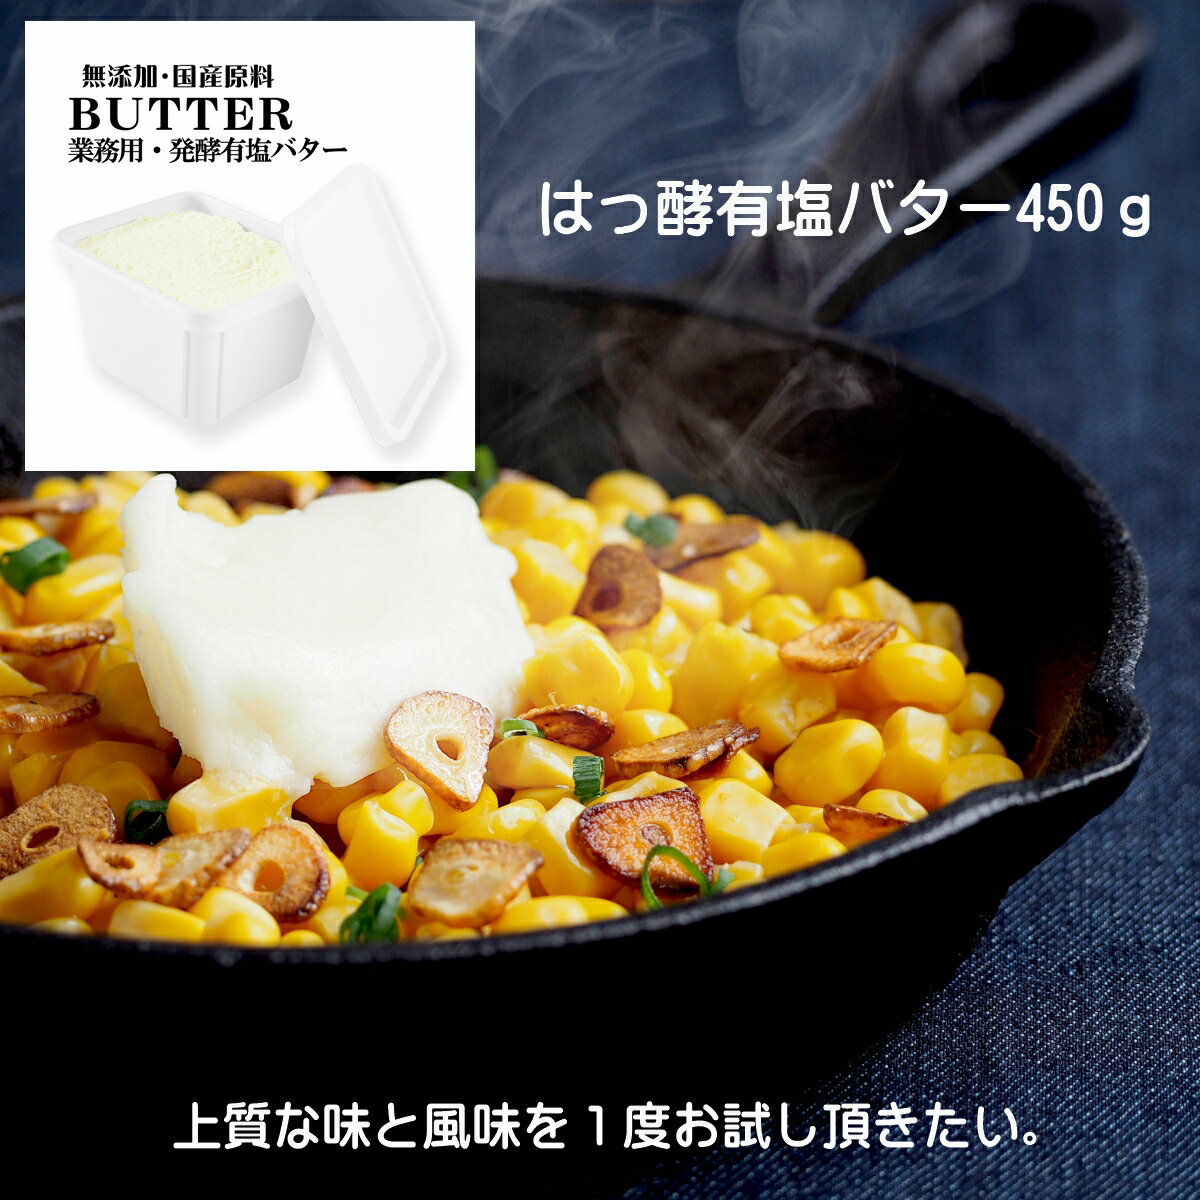 【 業務用 発酵バター 有塩 450g 】 